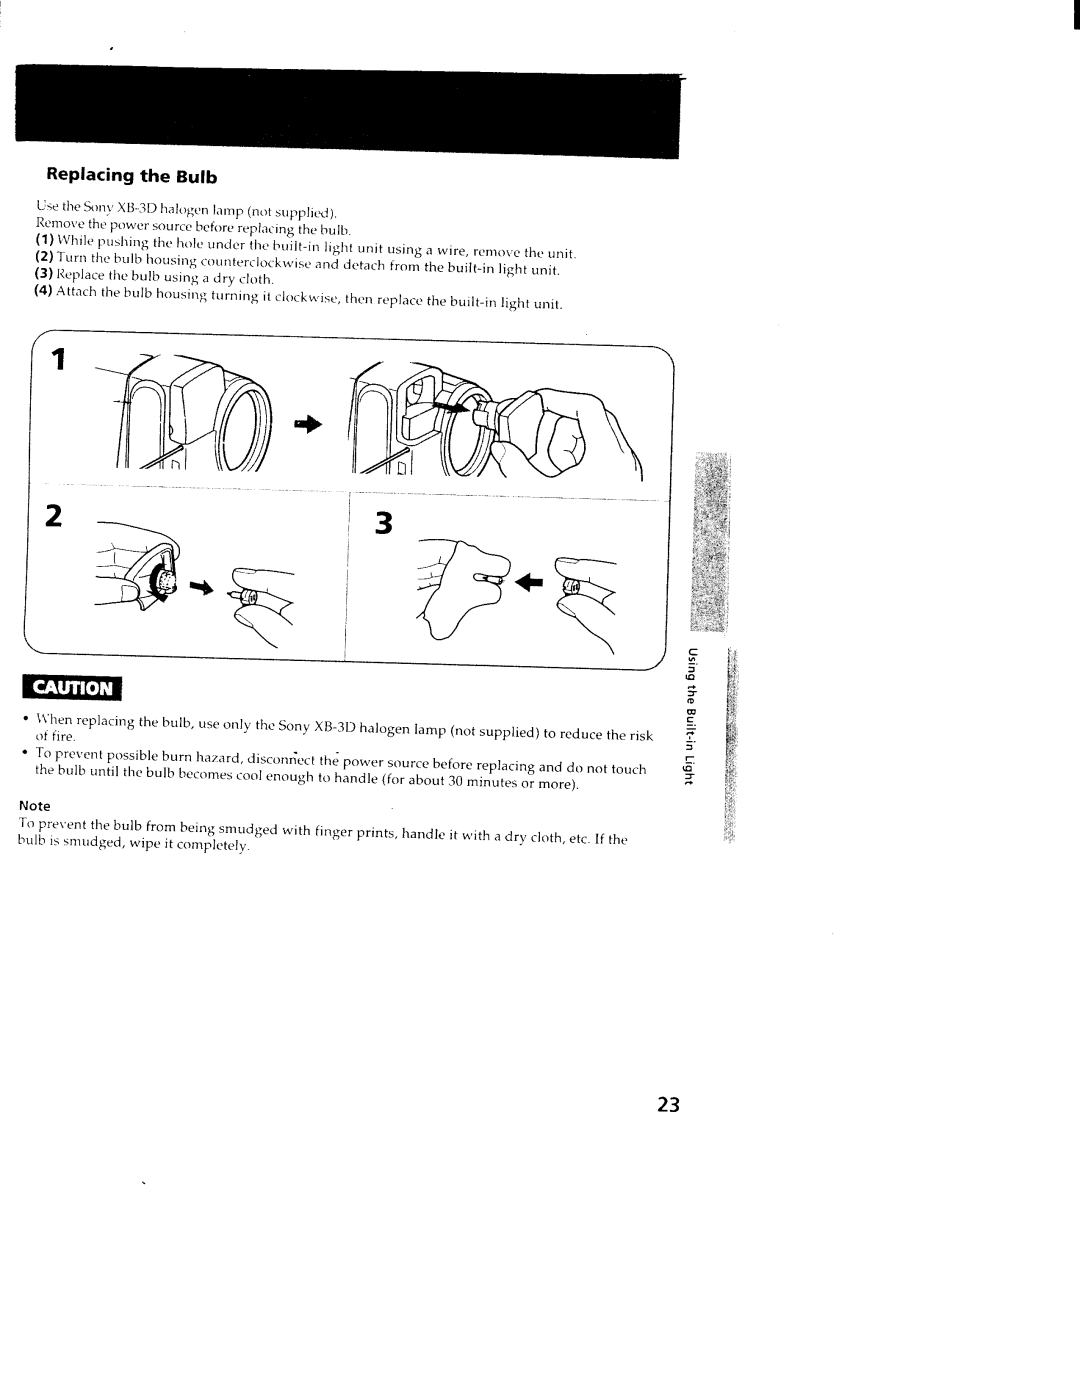 Sony CCD-TR78, TR98, TR88 manual 